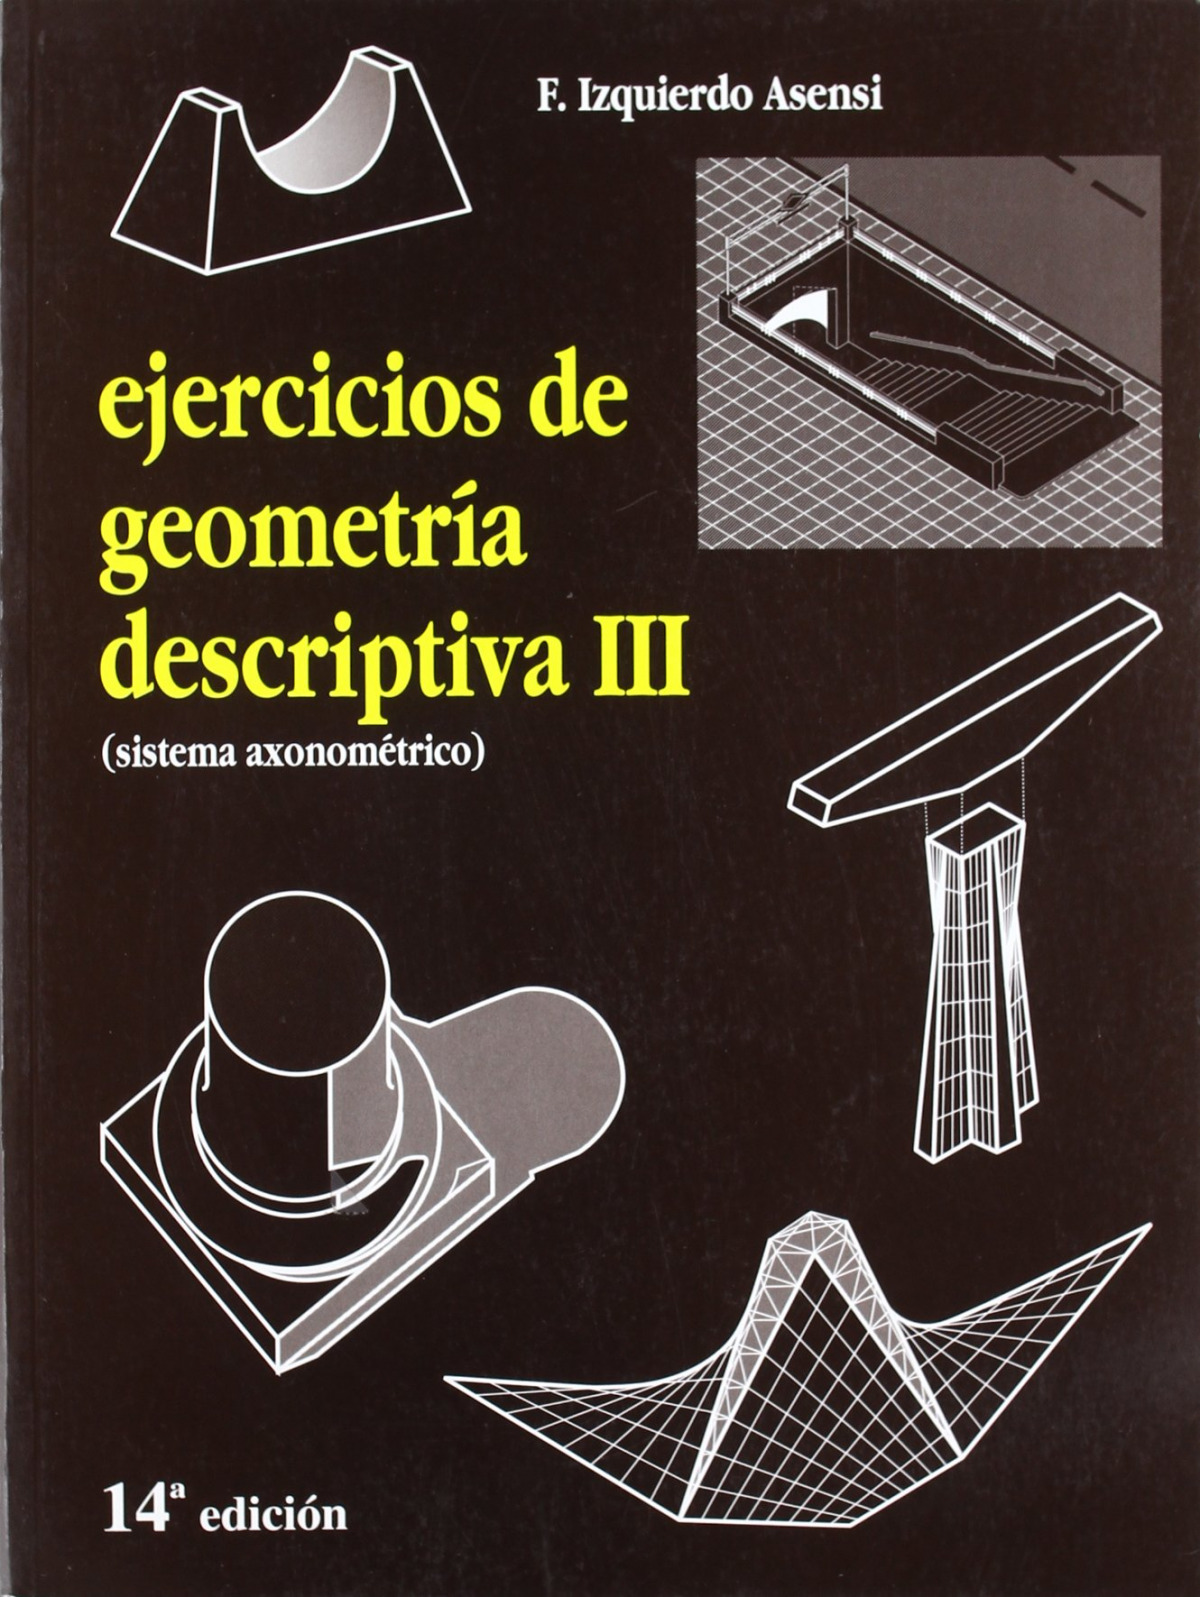 (14º) ejercicios de geometria descriptiva iii. sistema axiometrico - Izquierdo Asensi, F.